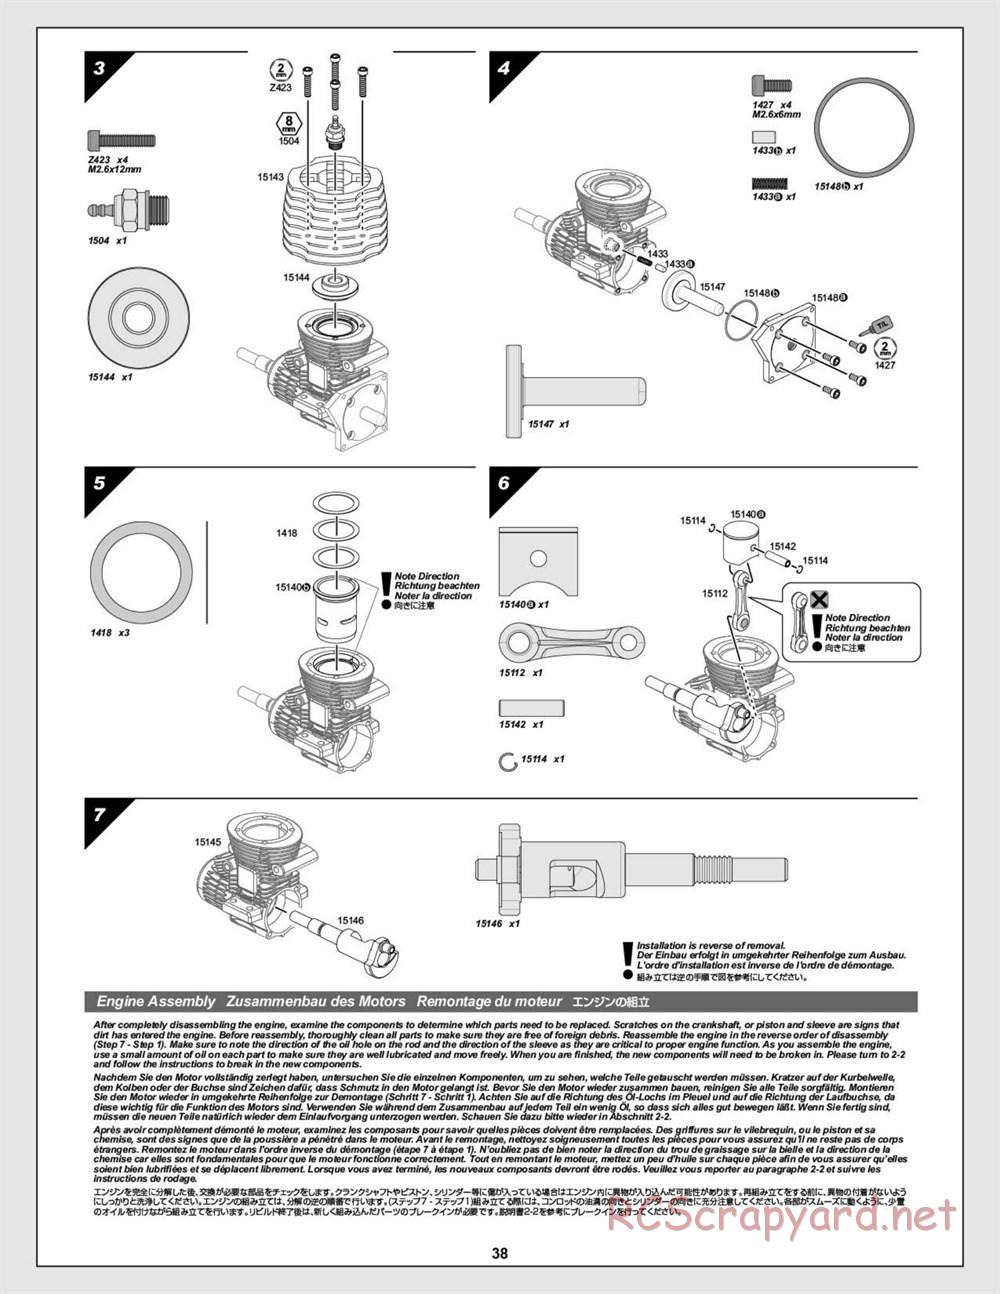 HPI - Firestorm 10T - Manual - Page 38